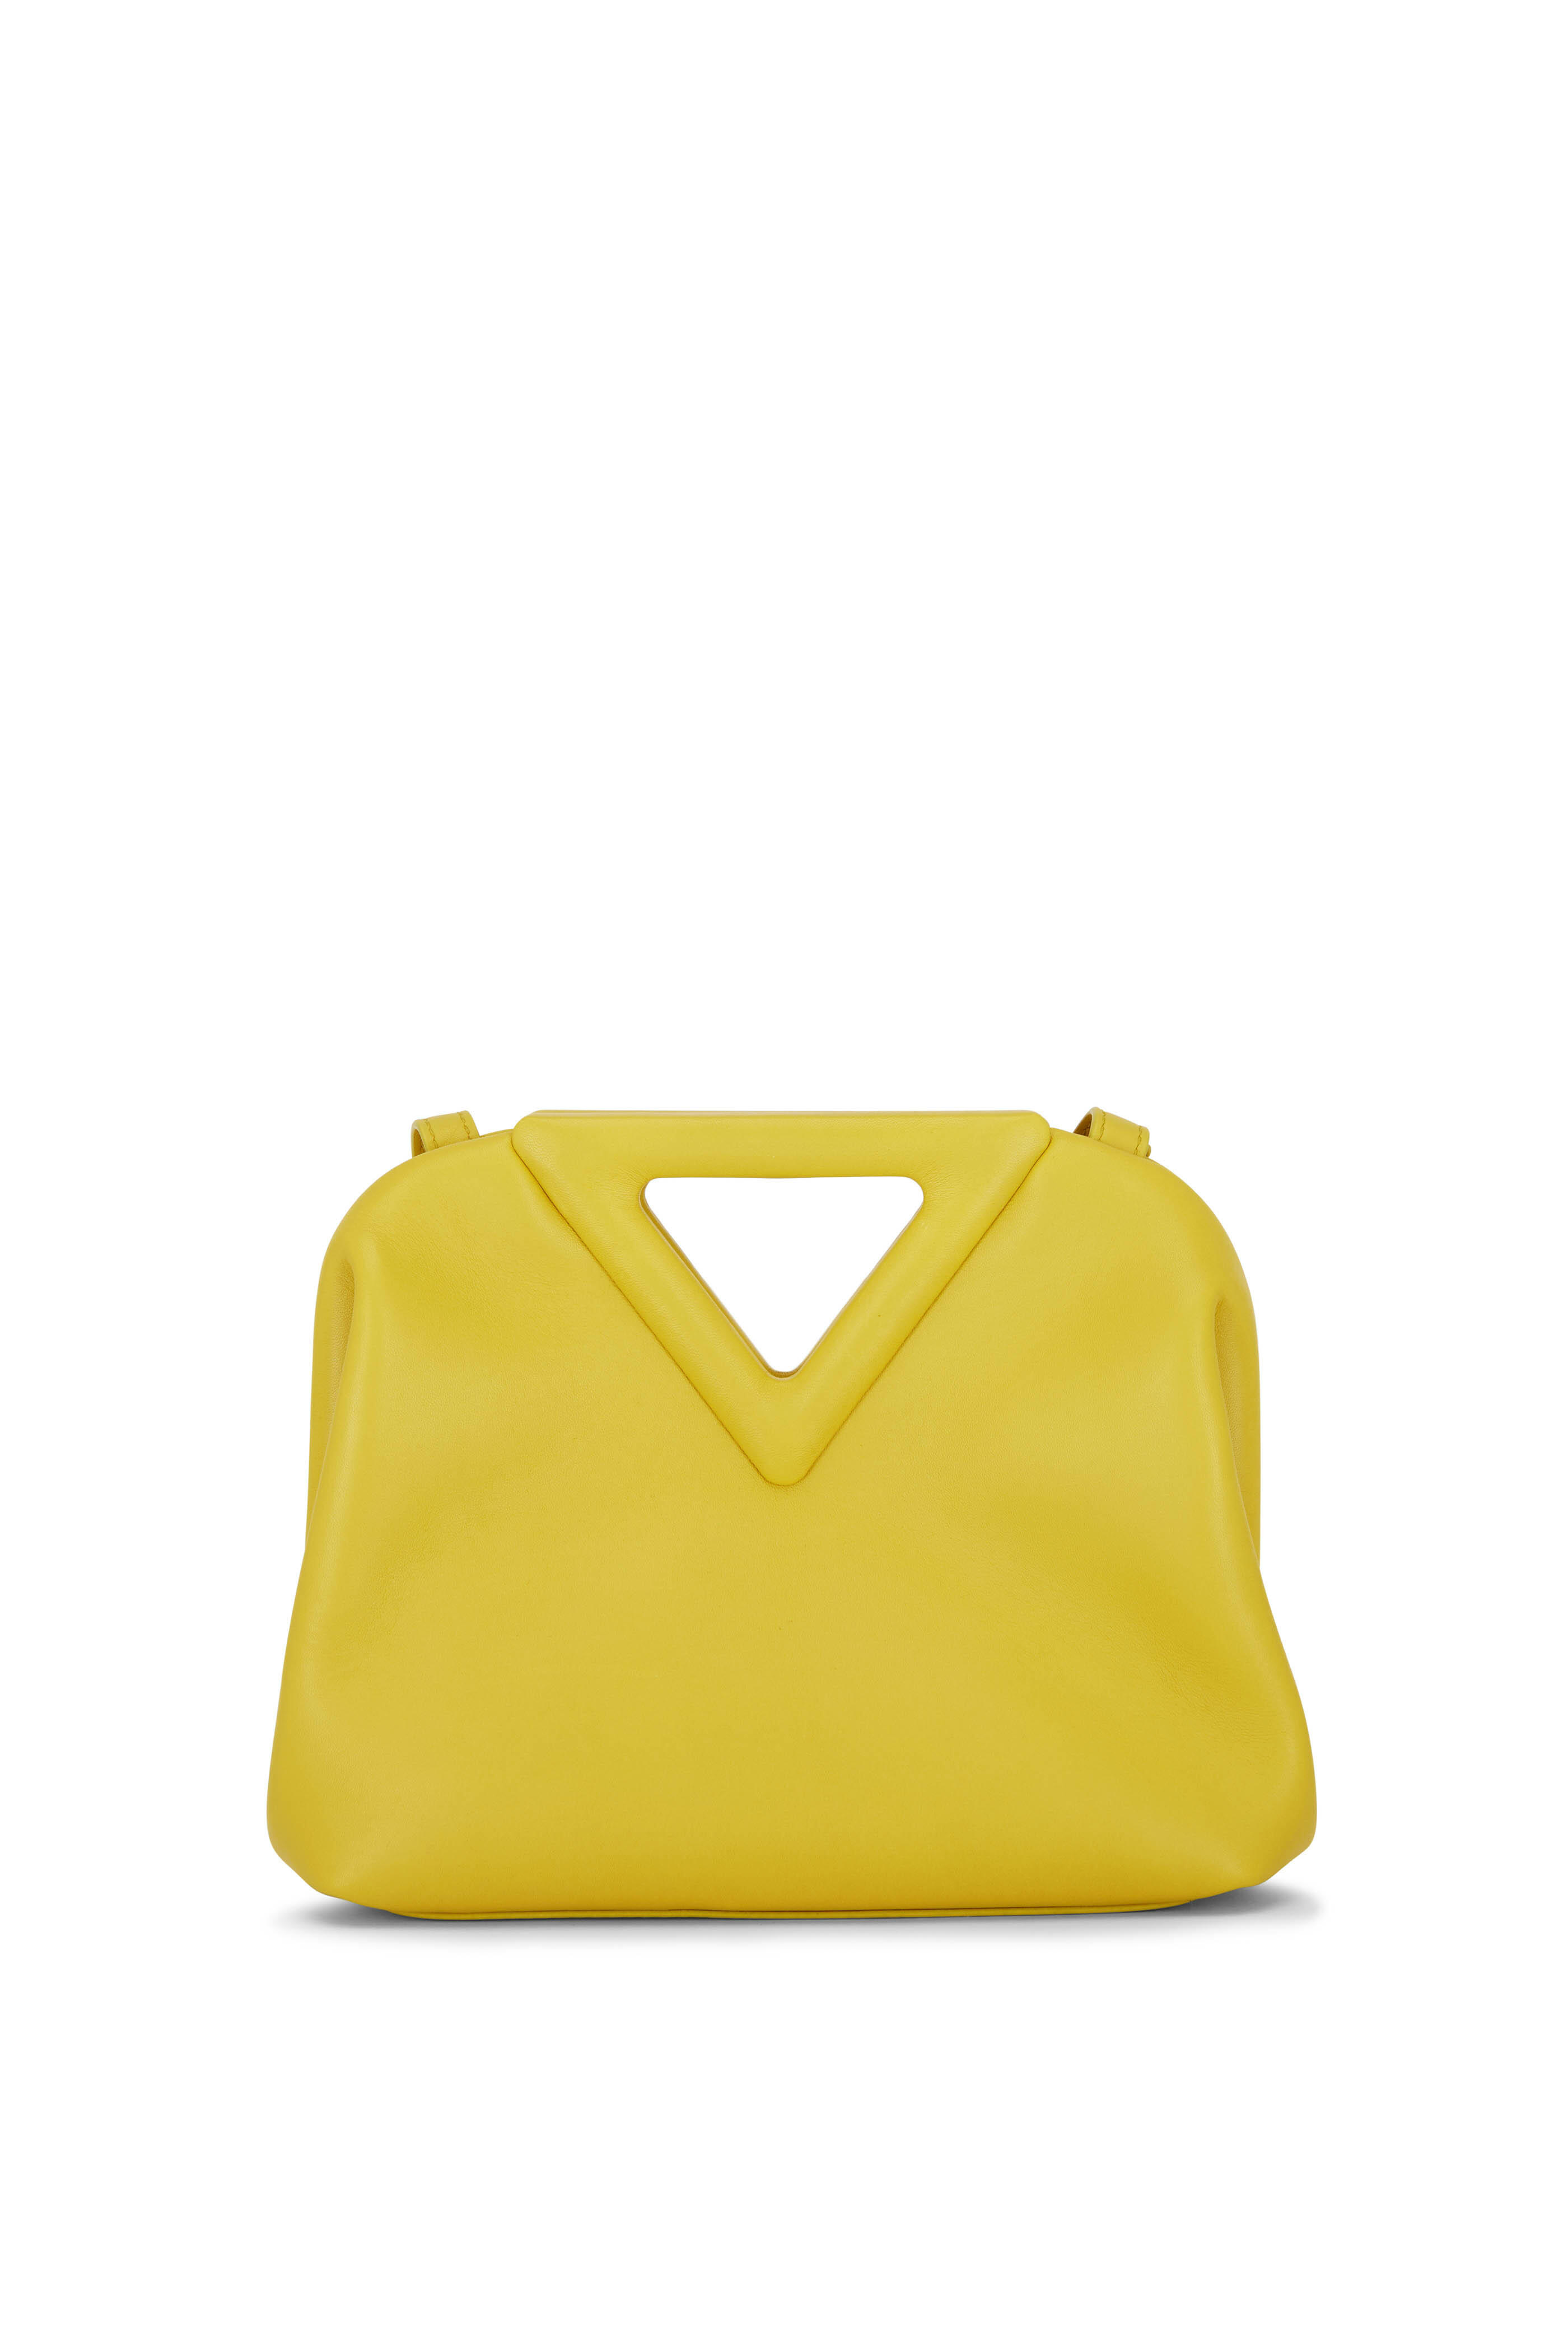 BOTTEGA VENETA yellow mini Leather Woven Pouch Clutch Crossbody Bag